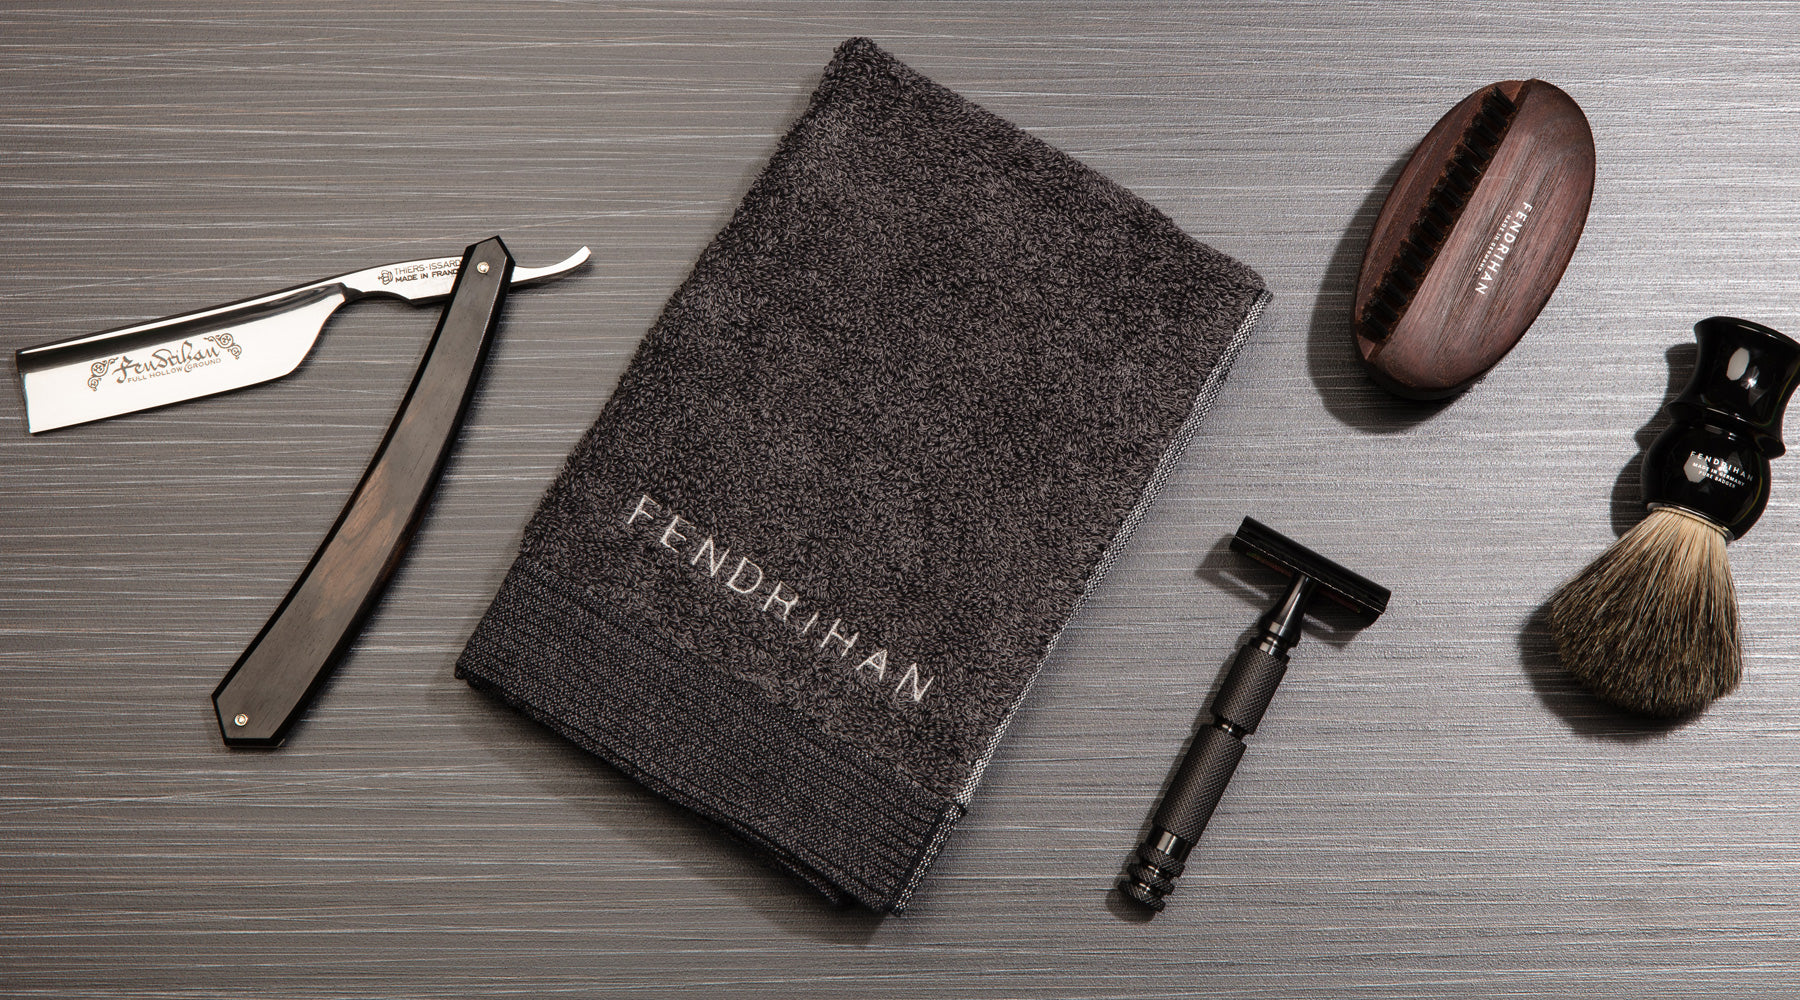 Fendrihan - Shaving, Grooming and Men's Gifts